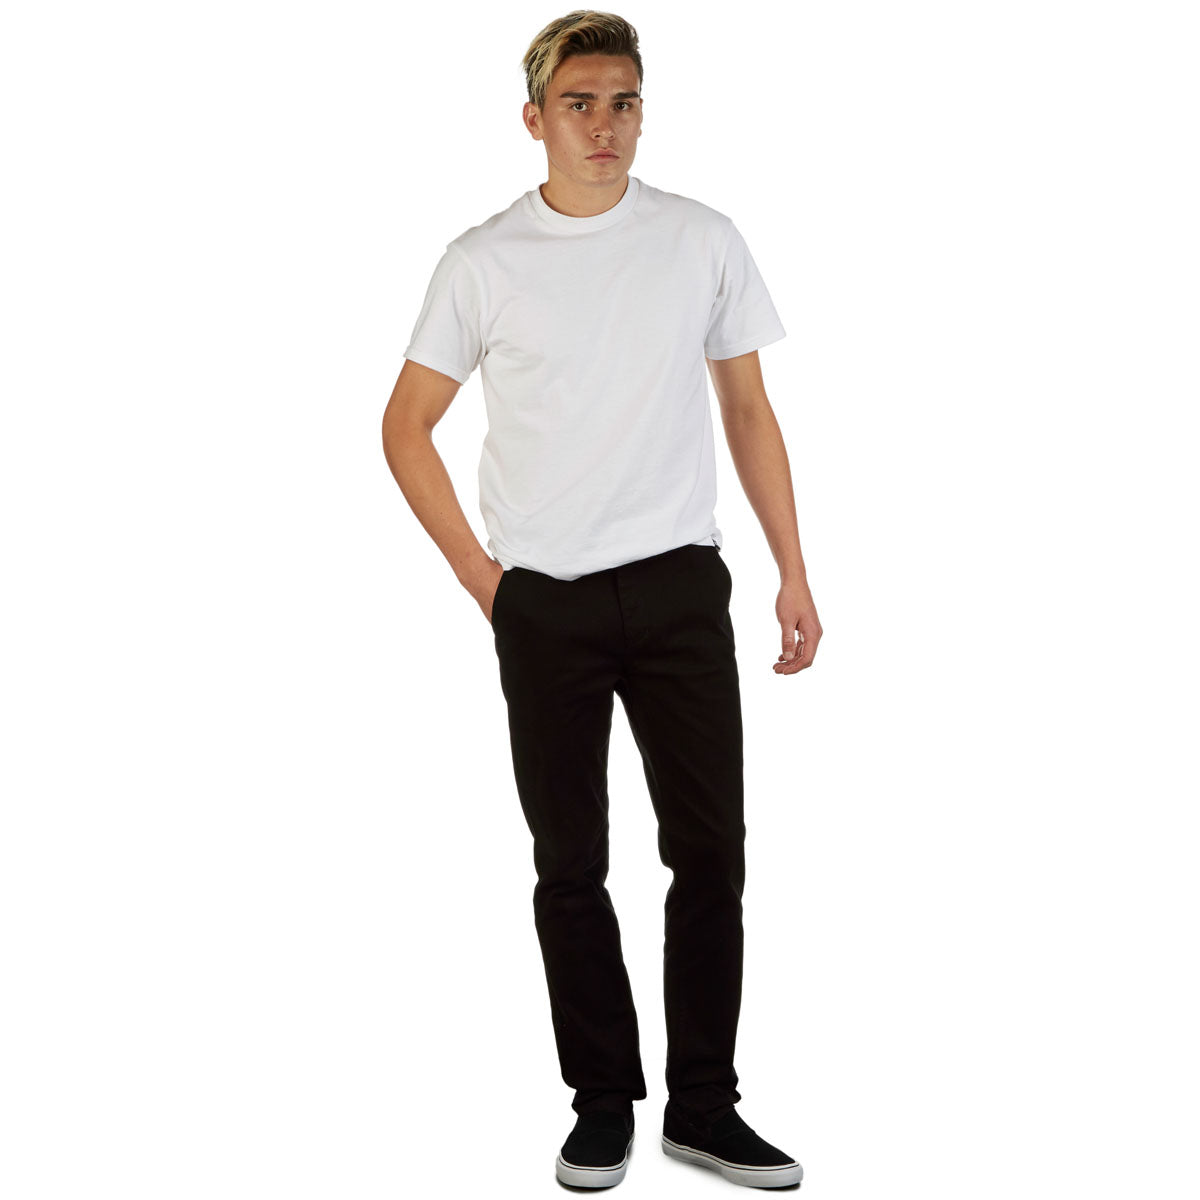 CCS Standard Plus Slim Chino Pants - Black image 2